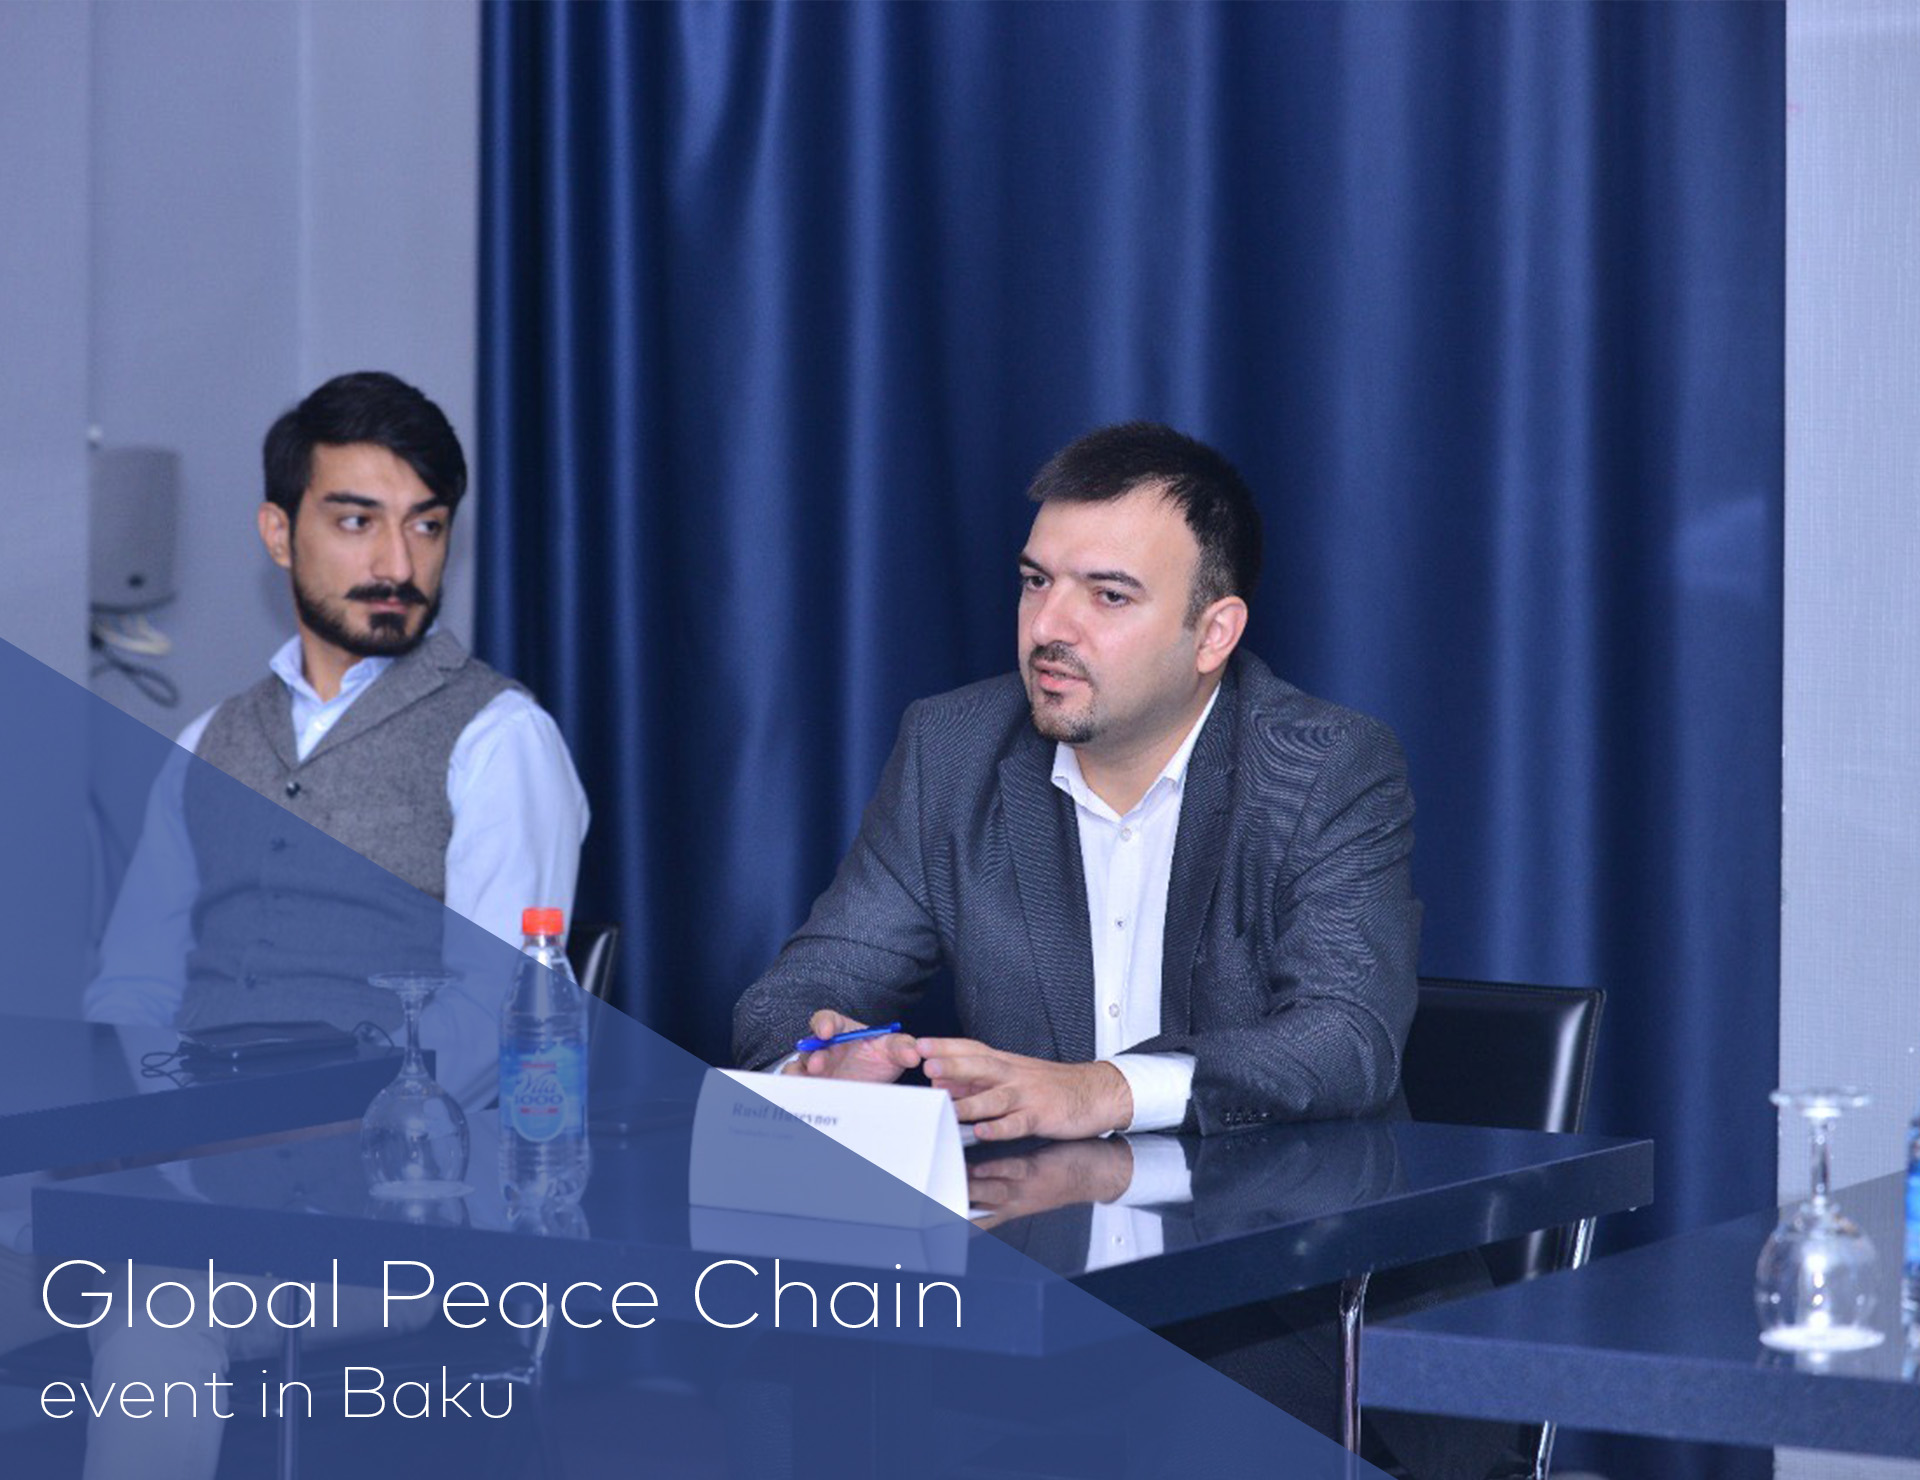 Global Peace Chain event in Baku